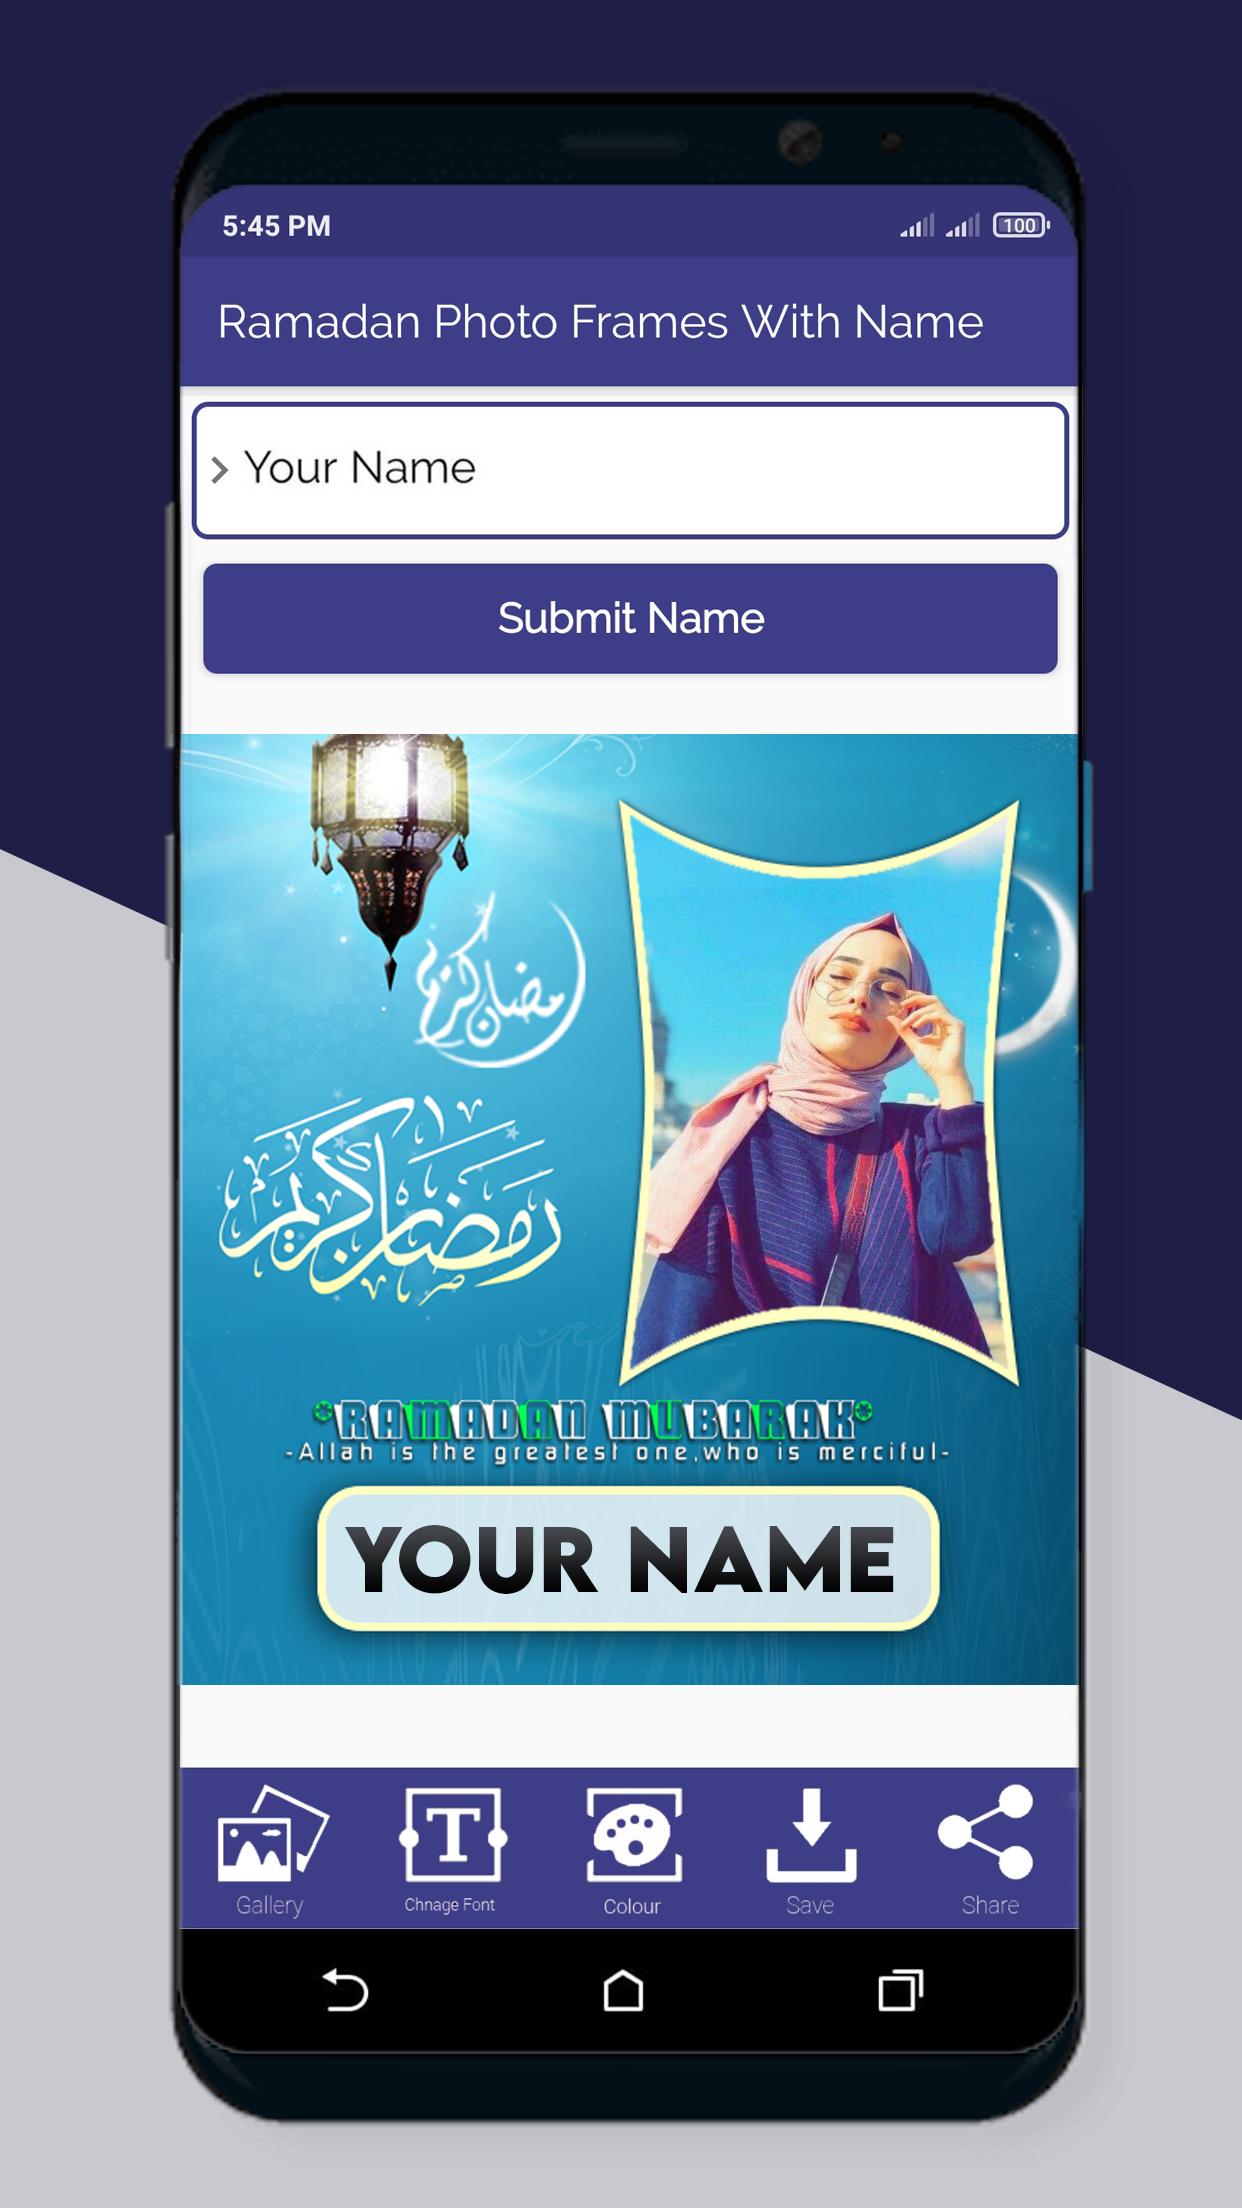 Ramadan 2021 Photo Frames With Name 3.0 Screenshot 7